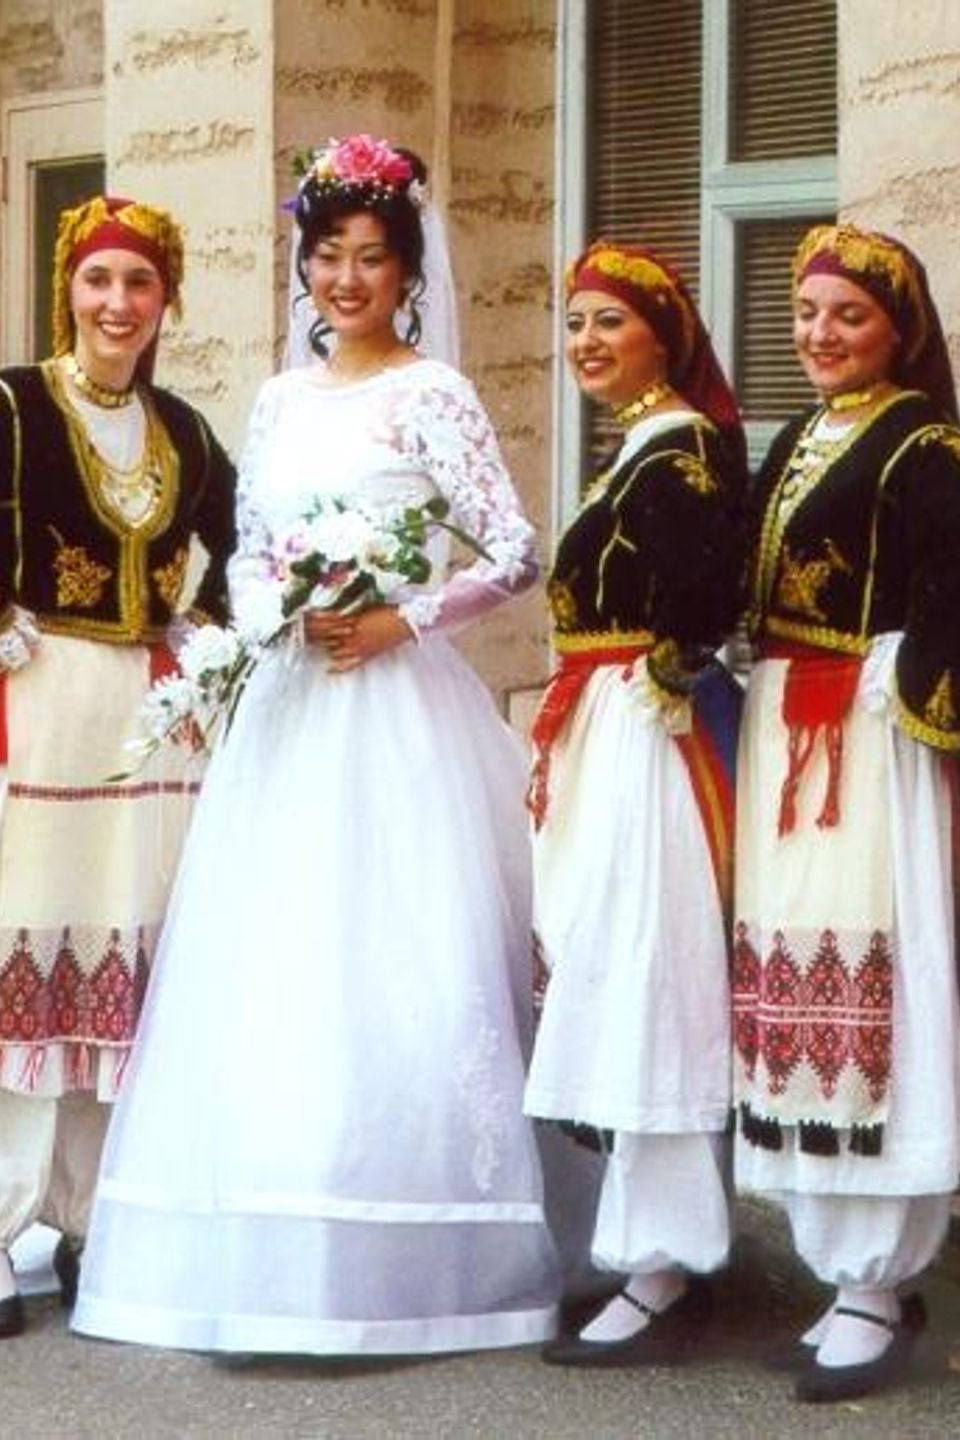 1999 with bride